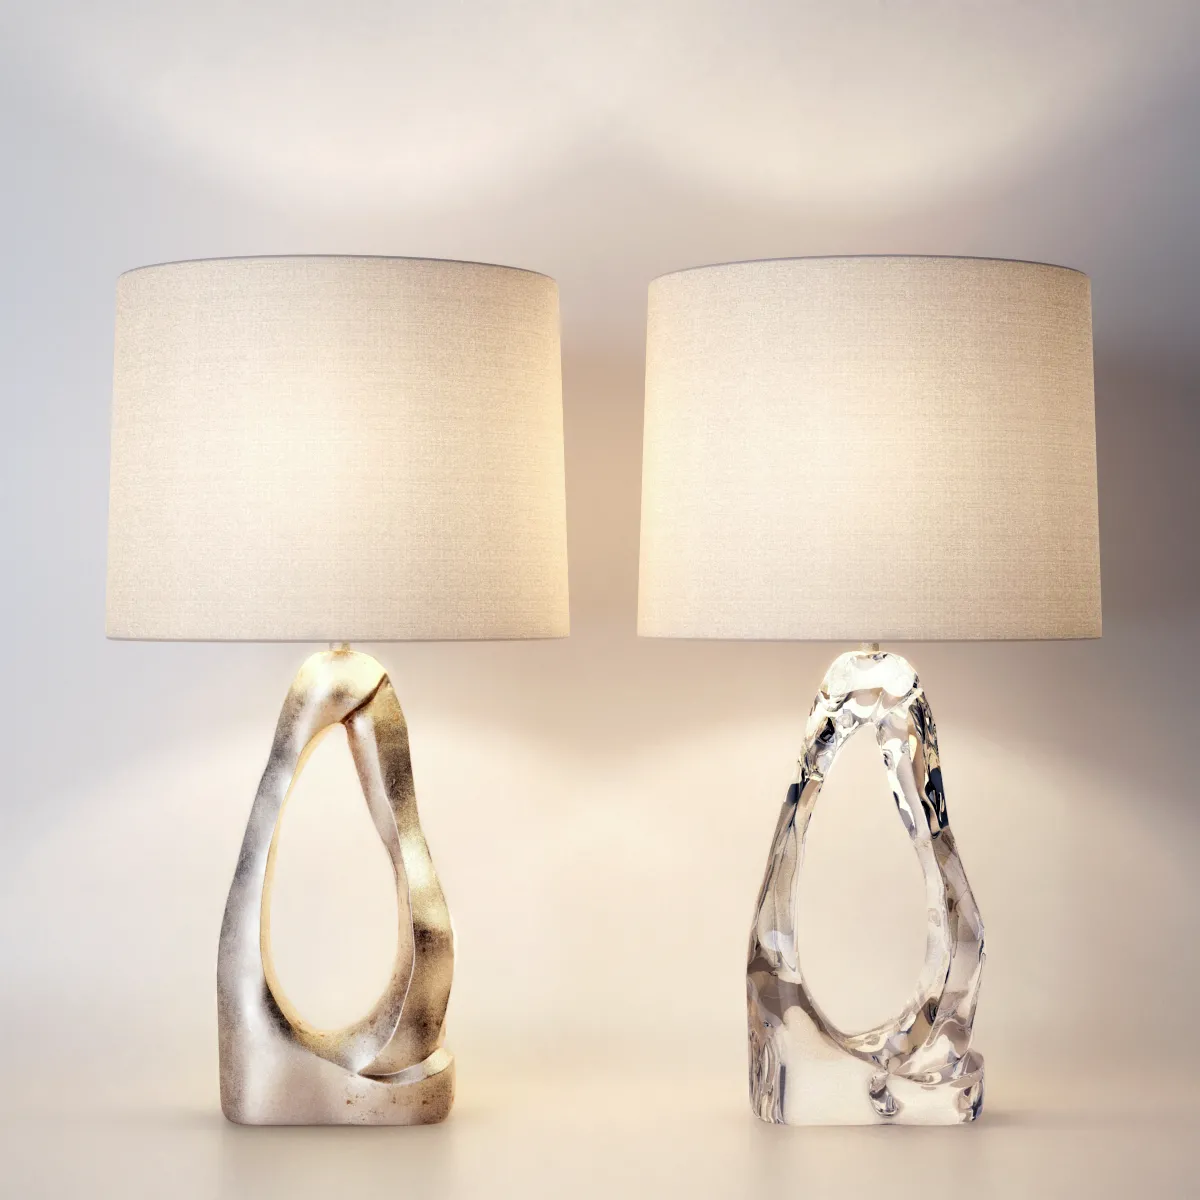 DECOR HELPER – LIGHT – NIGHT LAMP 3D MODELS – 200